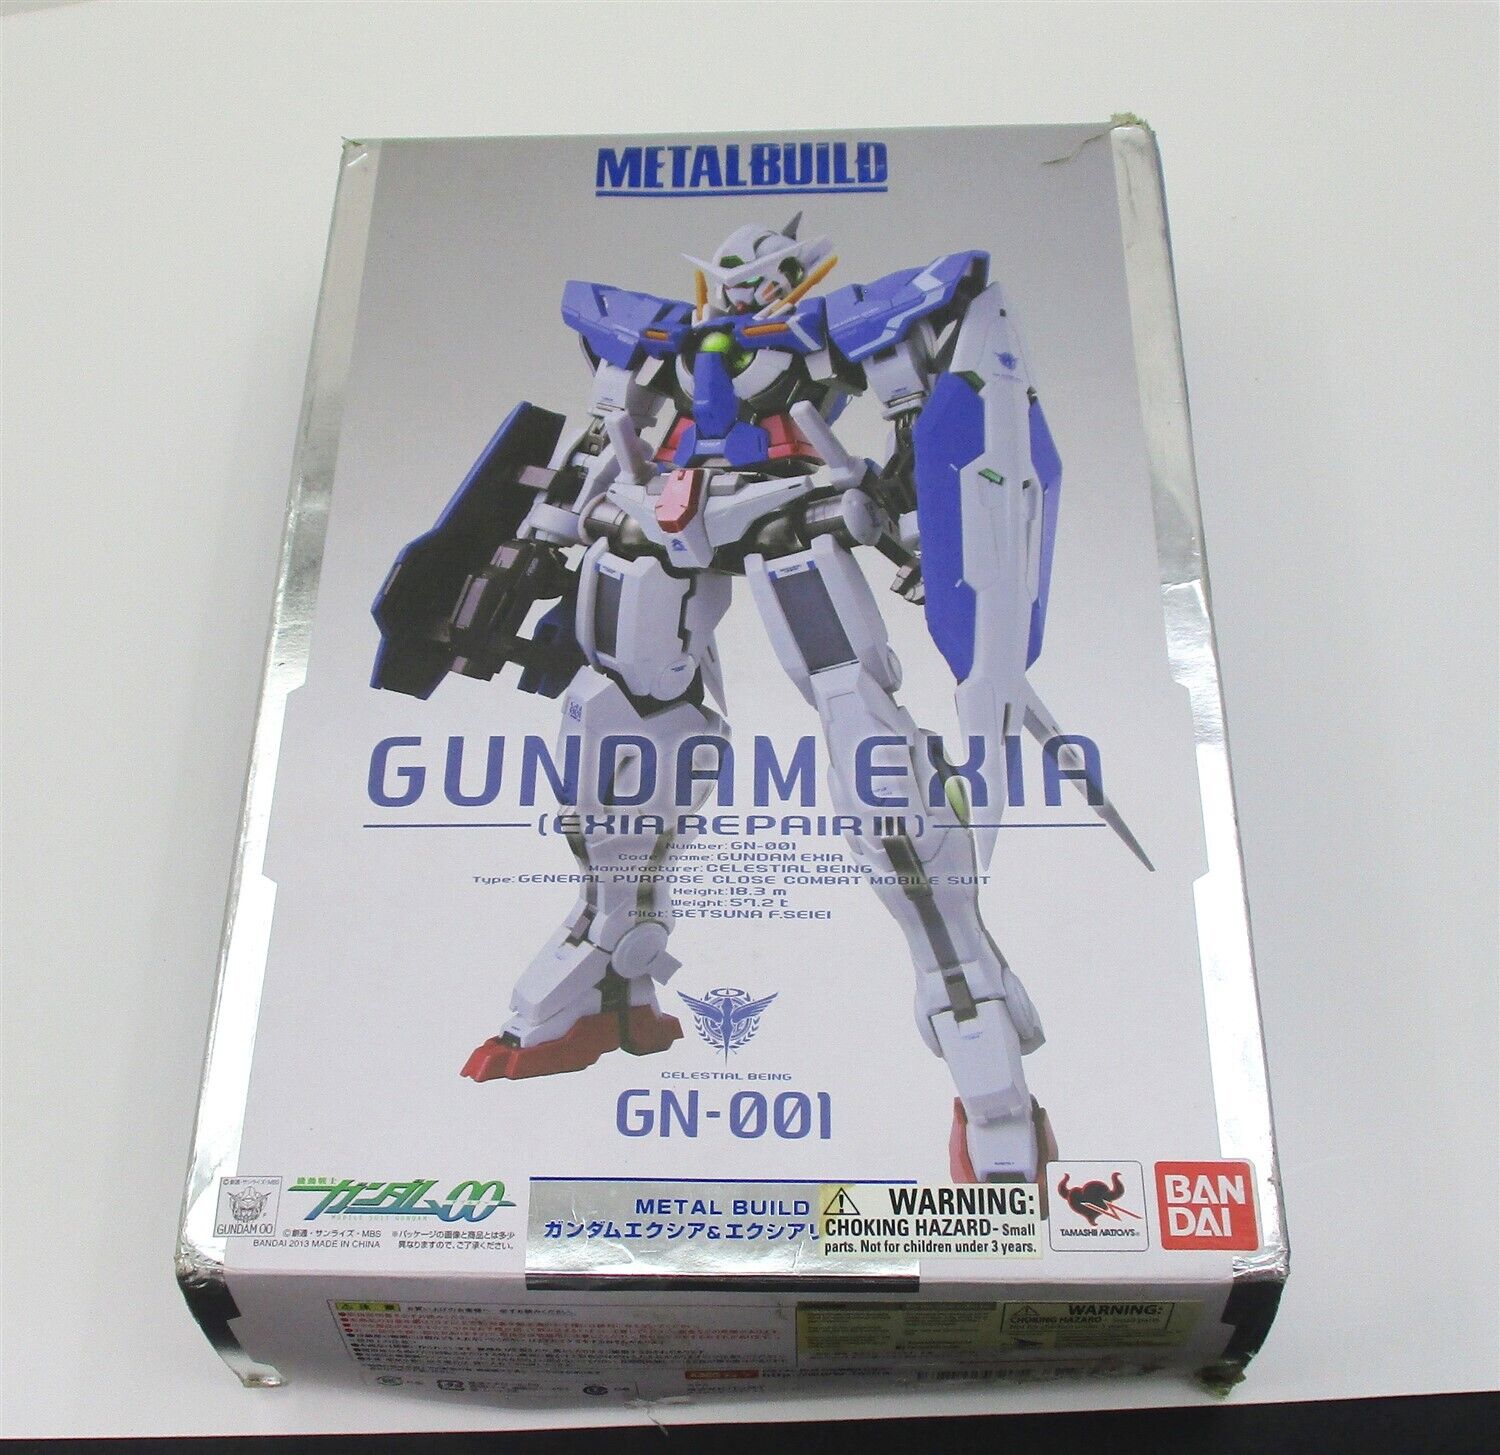 Metalbuild Gundam Exia (Exia Repair III), GN-001